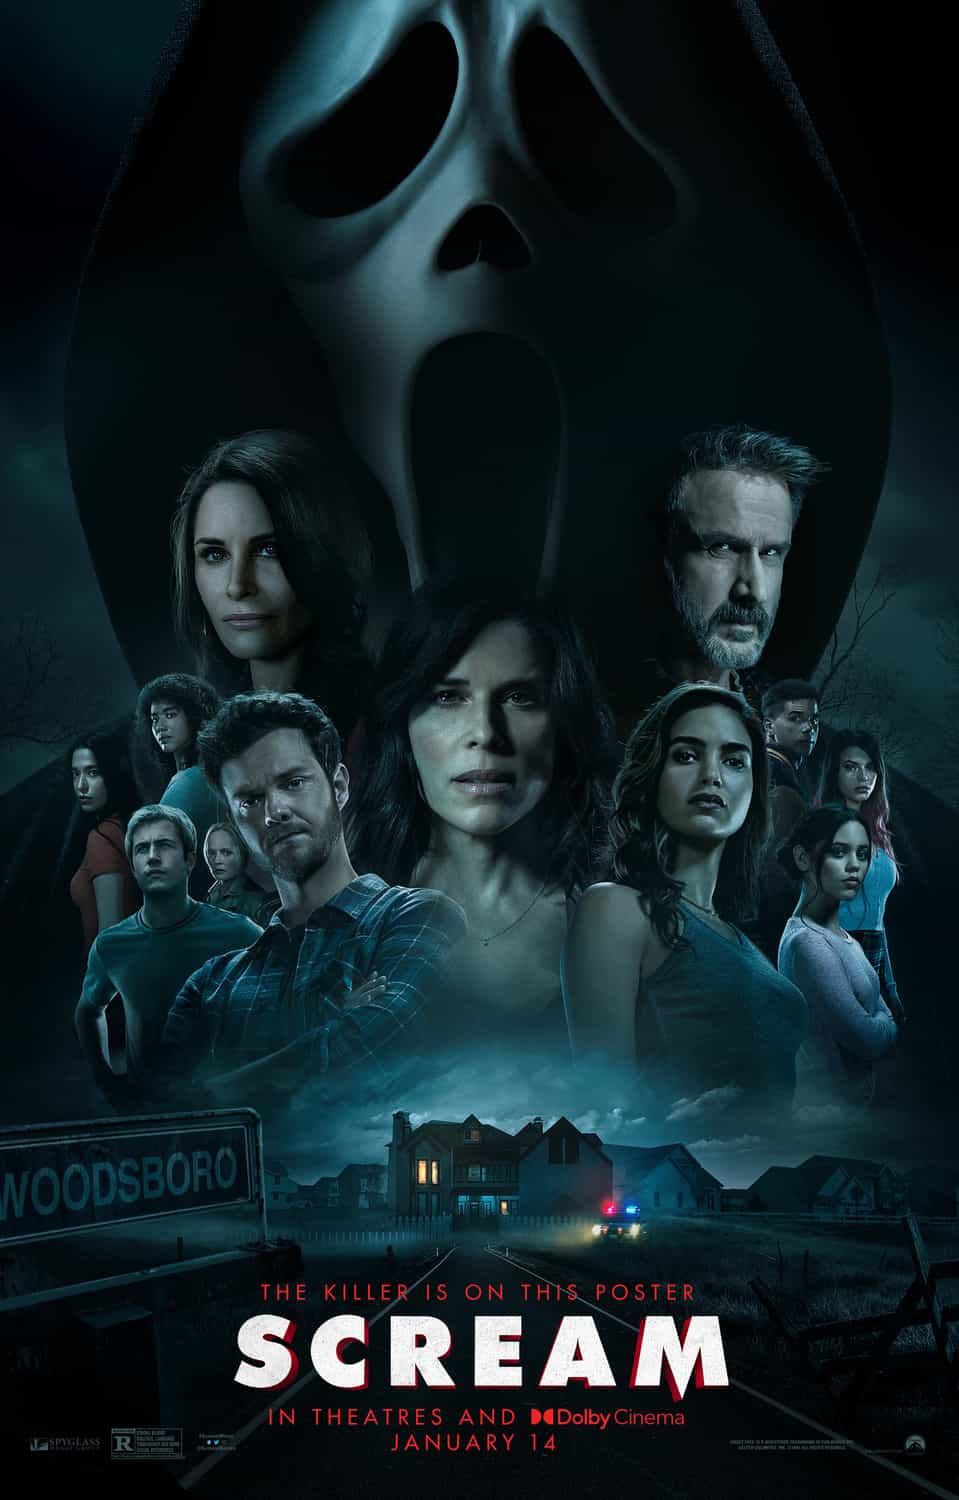 Scream 2022 gets its first trailer